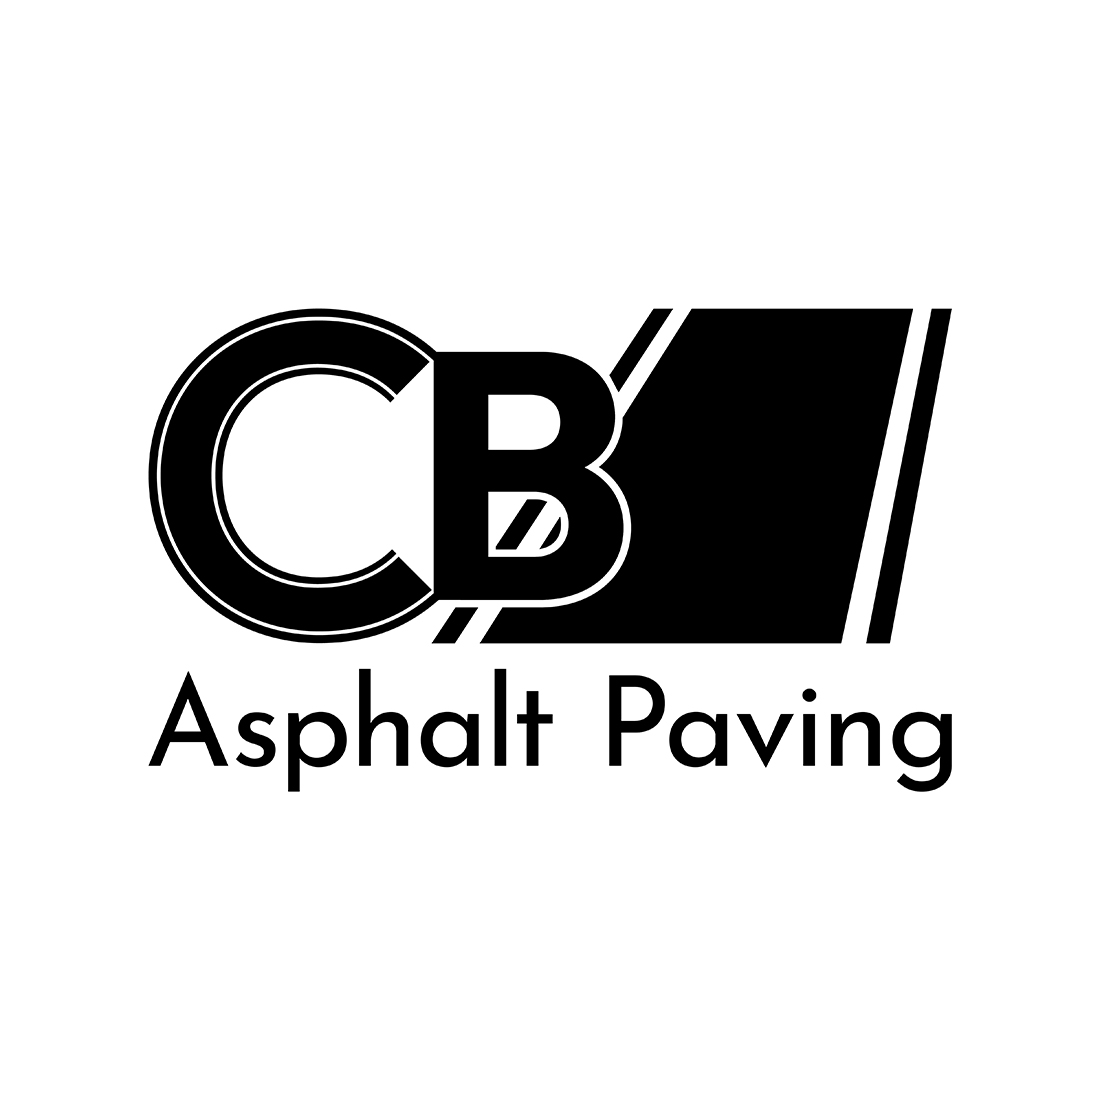 CB letter asphalt paving combination mark logo preview image.